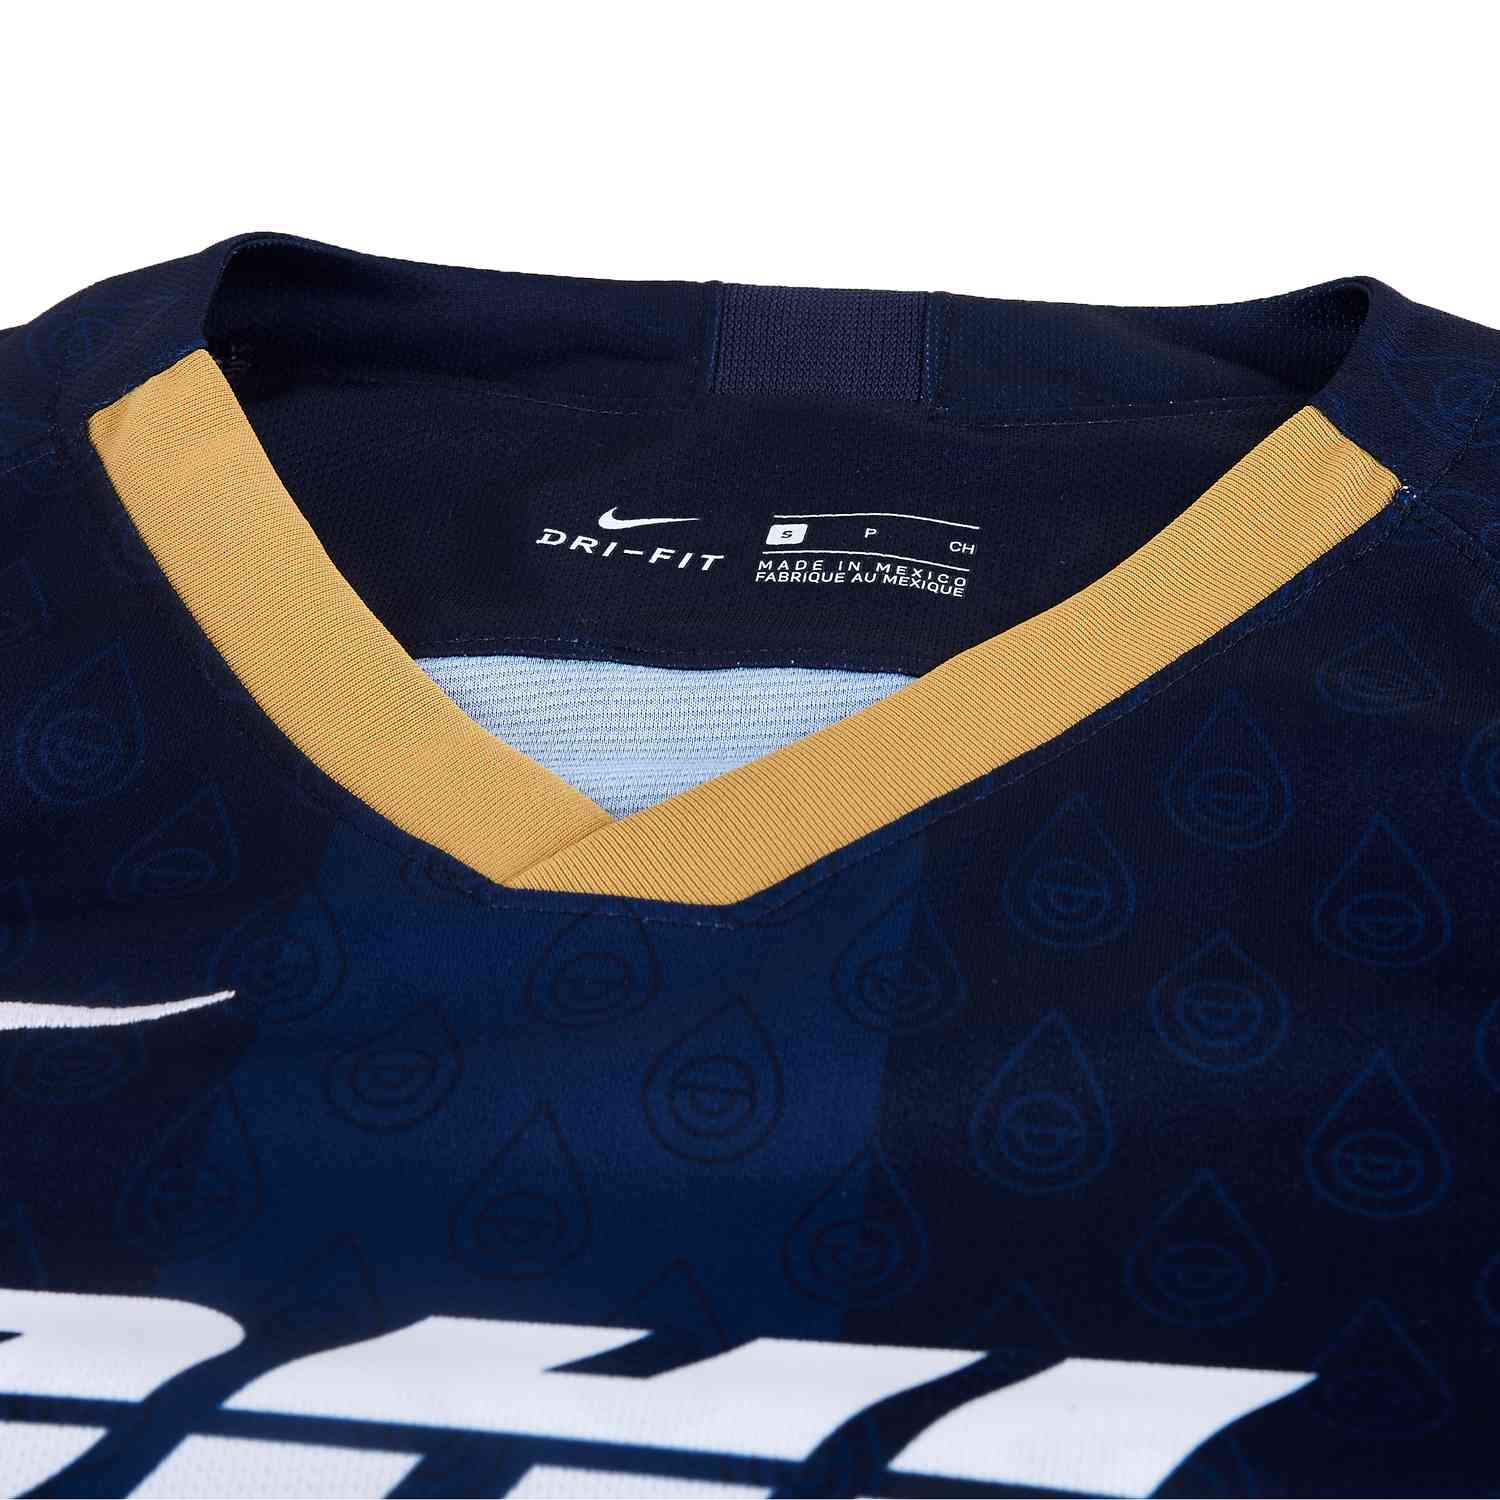 Nike Launch Pumas 2019/20 Home & Away Jerseys - SoccerBible